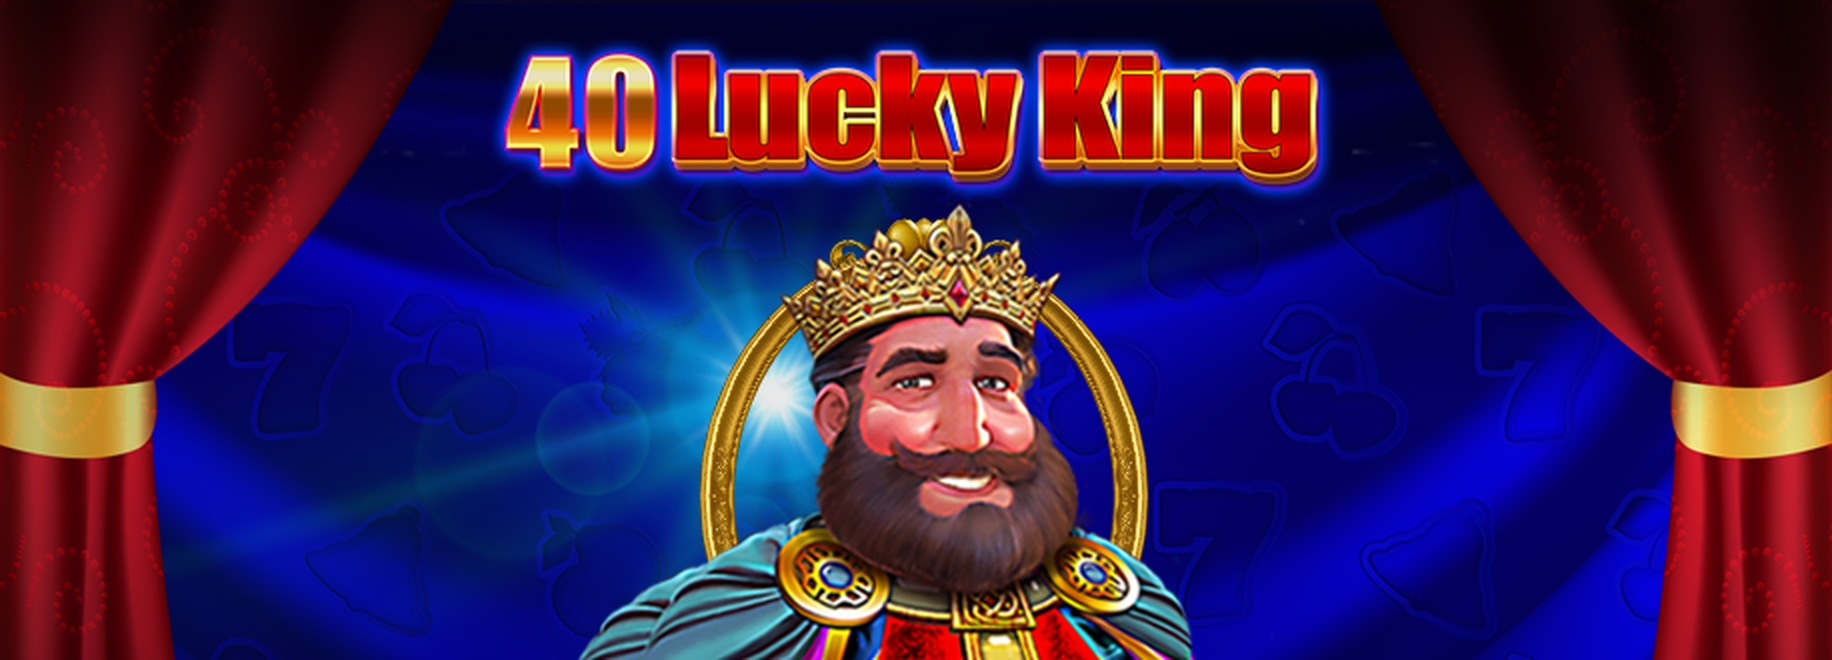 40 Lucky King demo